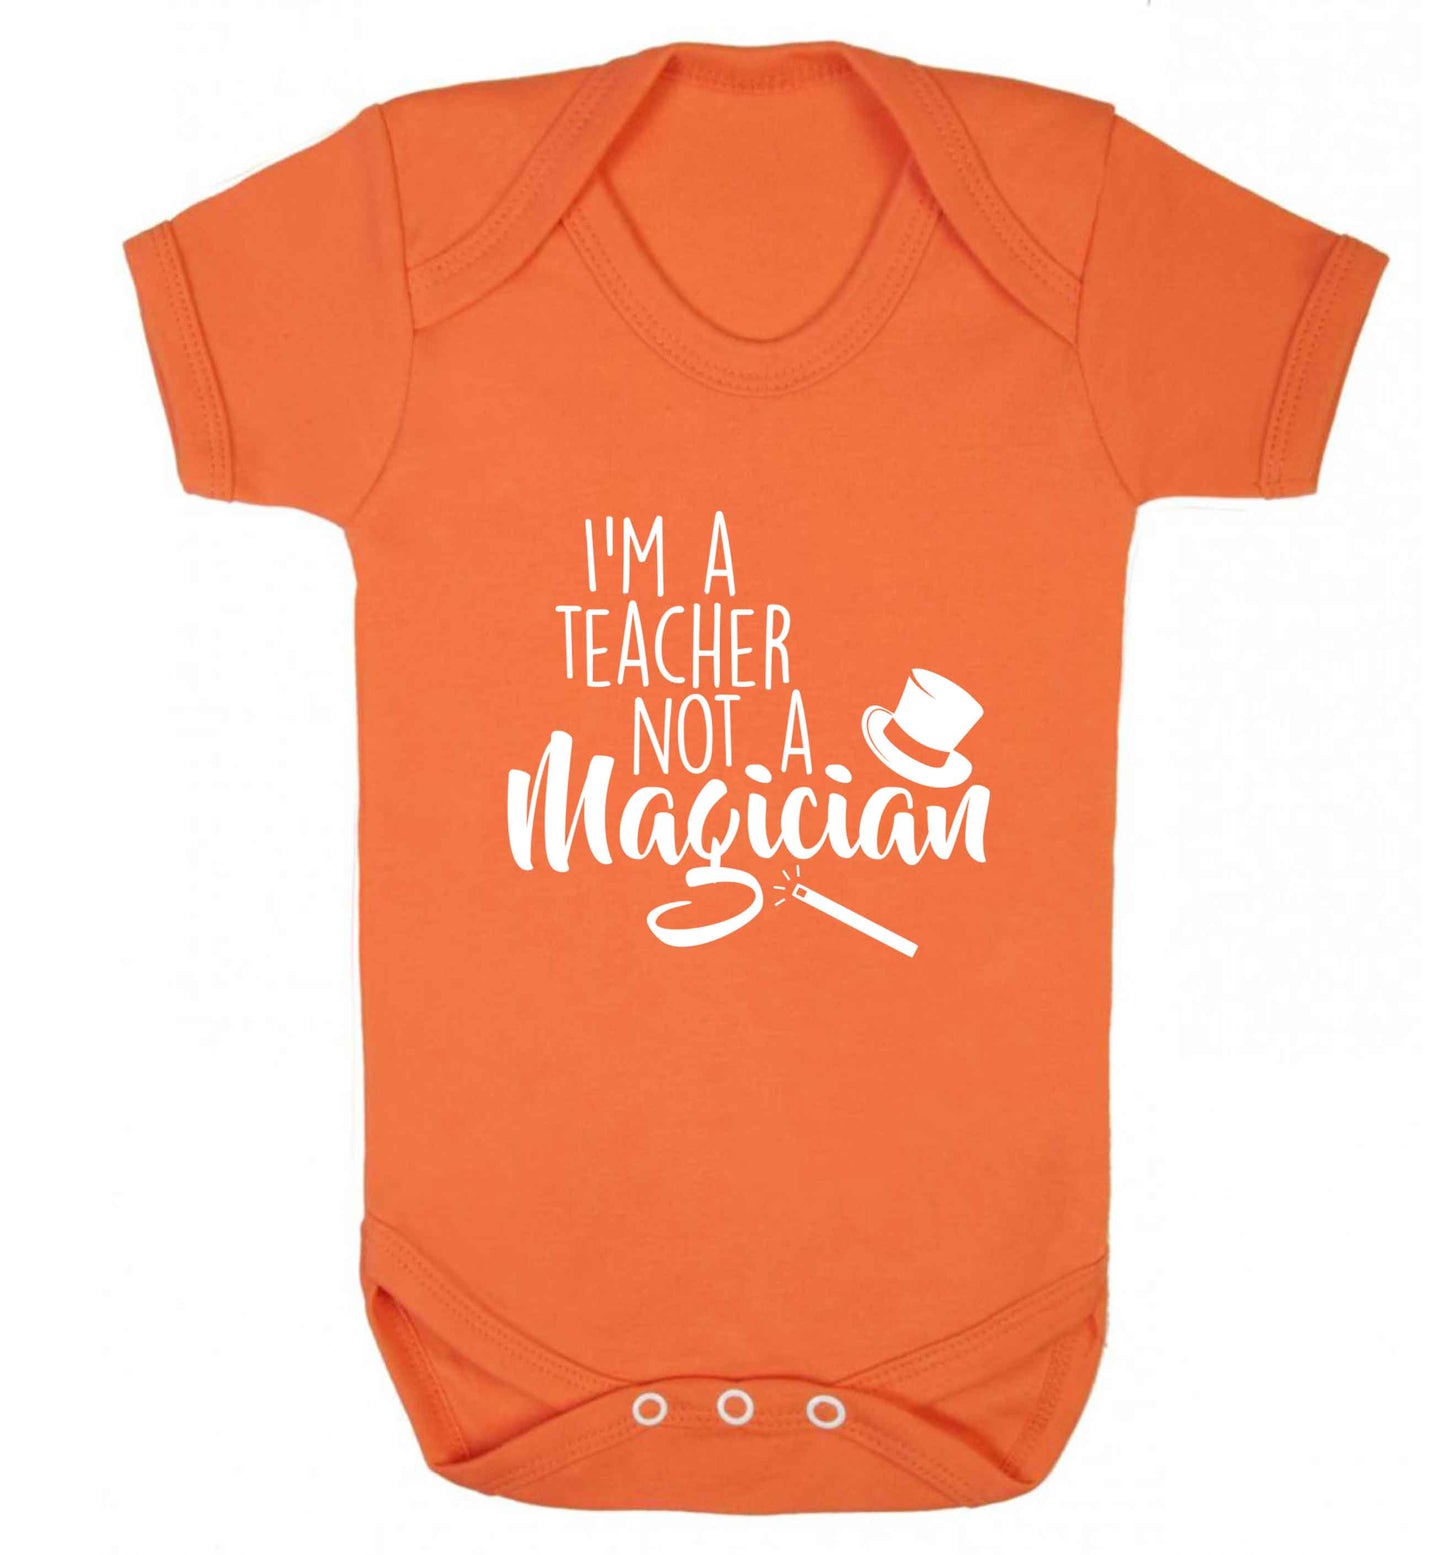 I'm a teacher not a magician baby vest orange 18-24 months